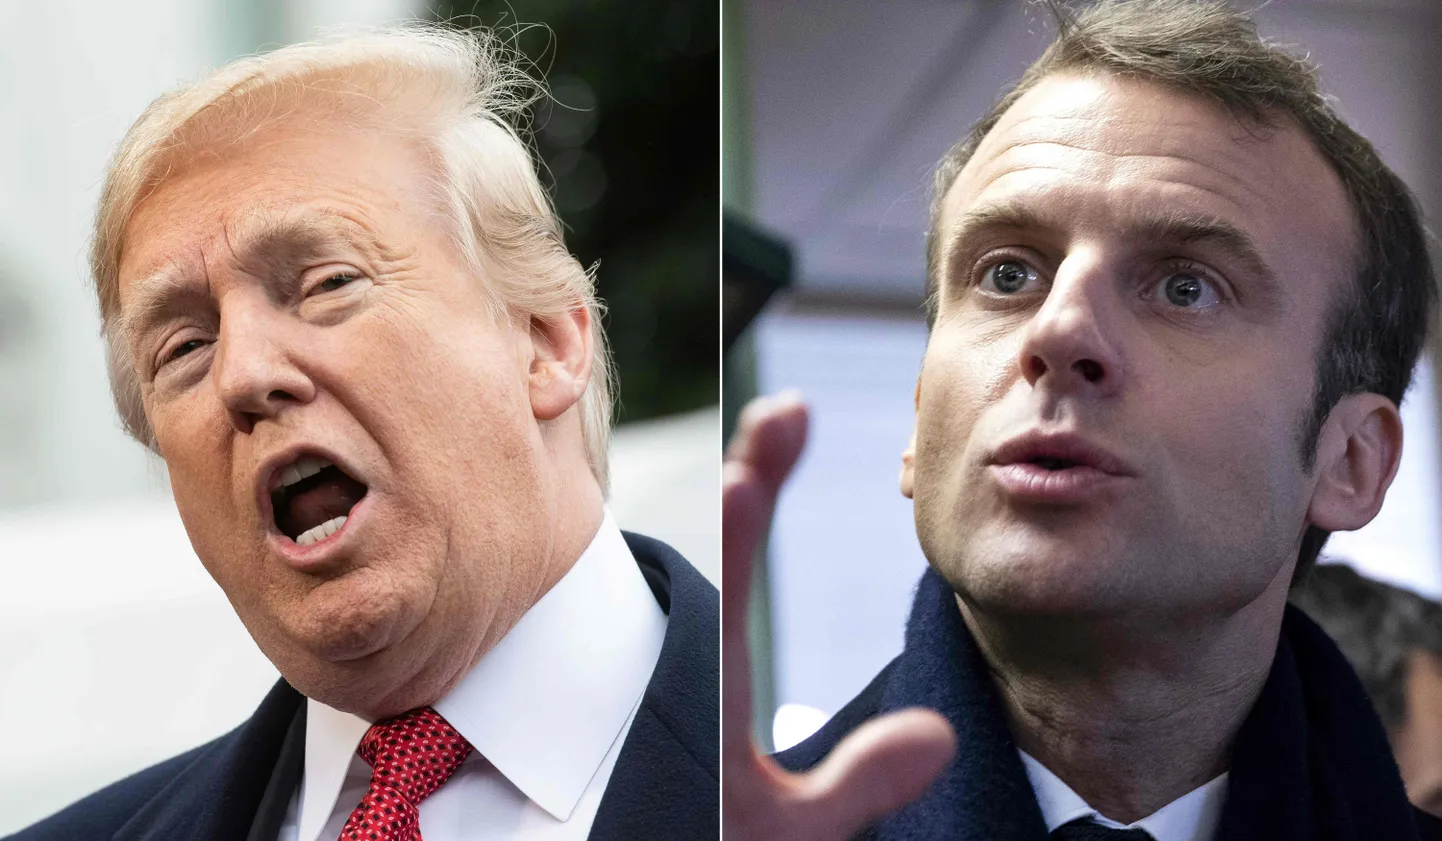 Donald Trump ja Emmanuel Macron.